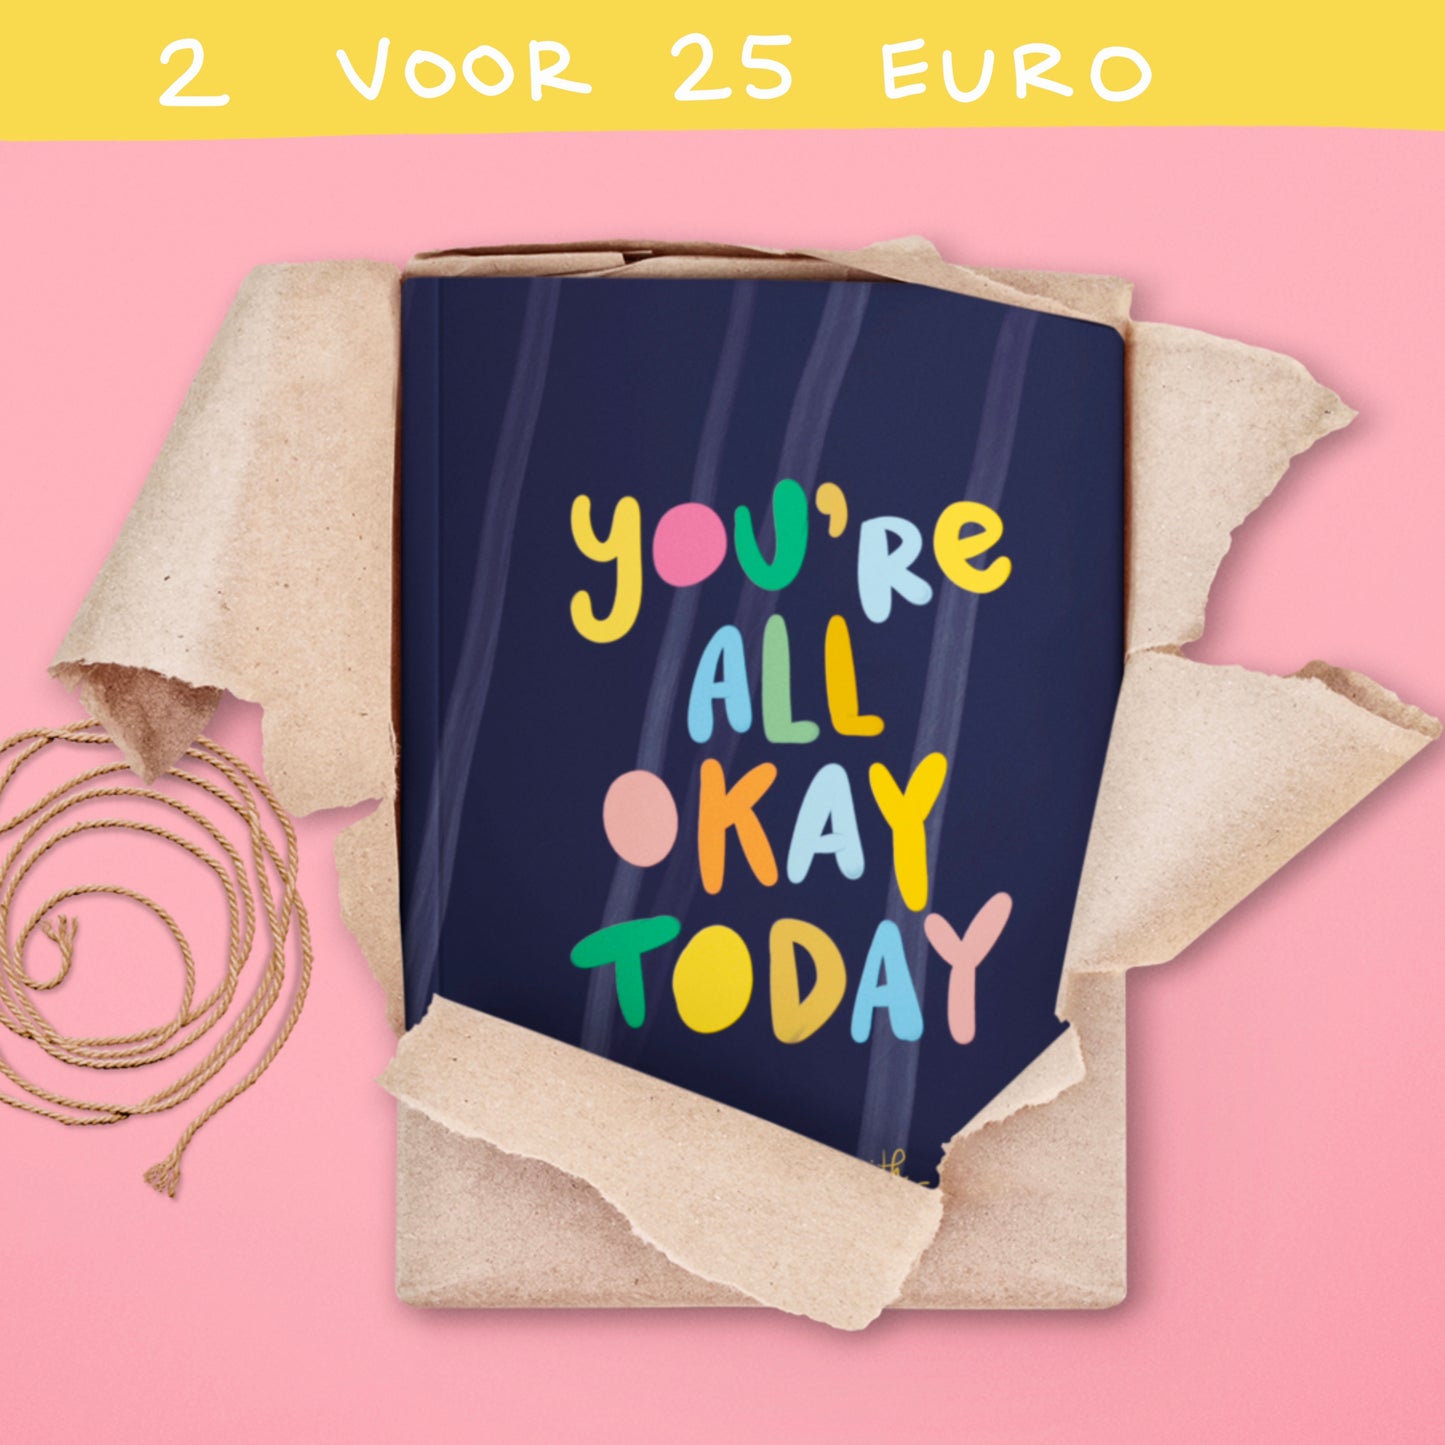 Liefste Notitie-boek ooit - You are all OKAY (2 voor 25 euro op alle notebooks en kaartensets)